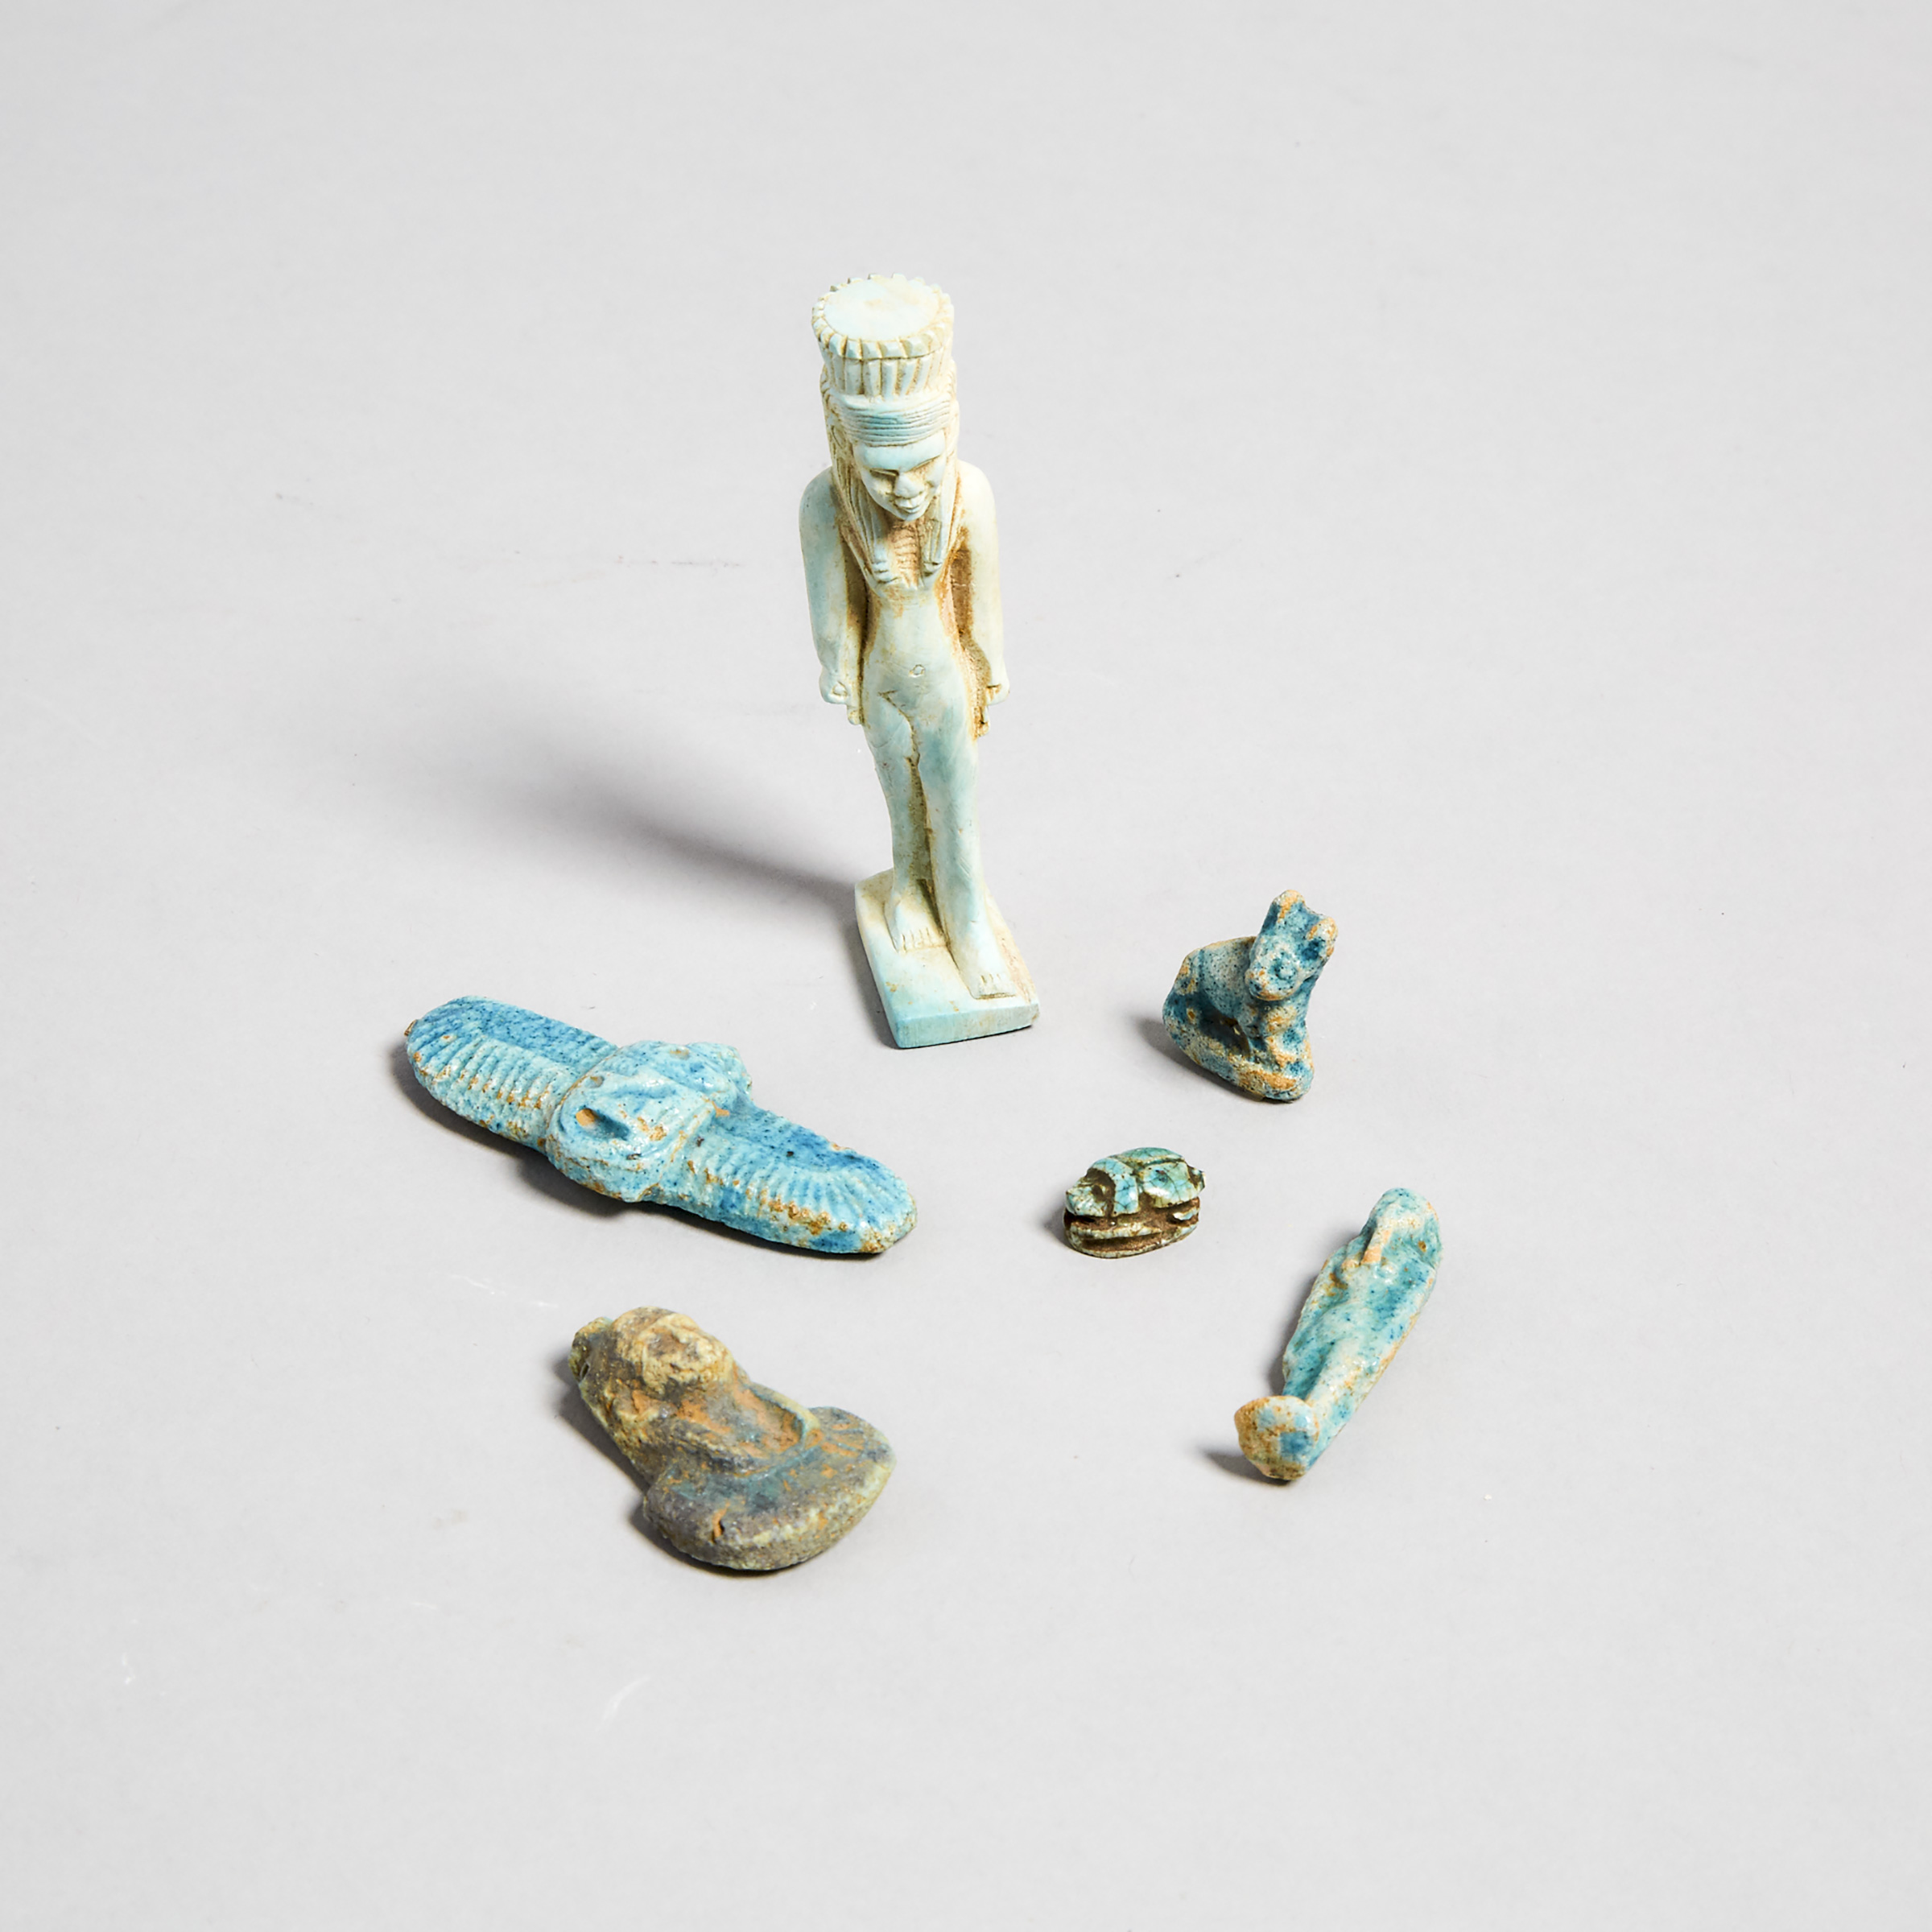 Six Egyptian Faience Amulets, Late Period, 3500-30 B.C.